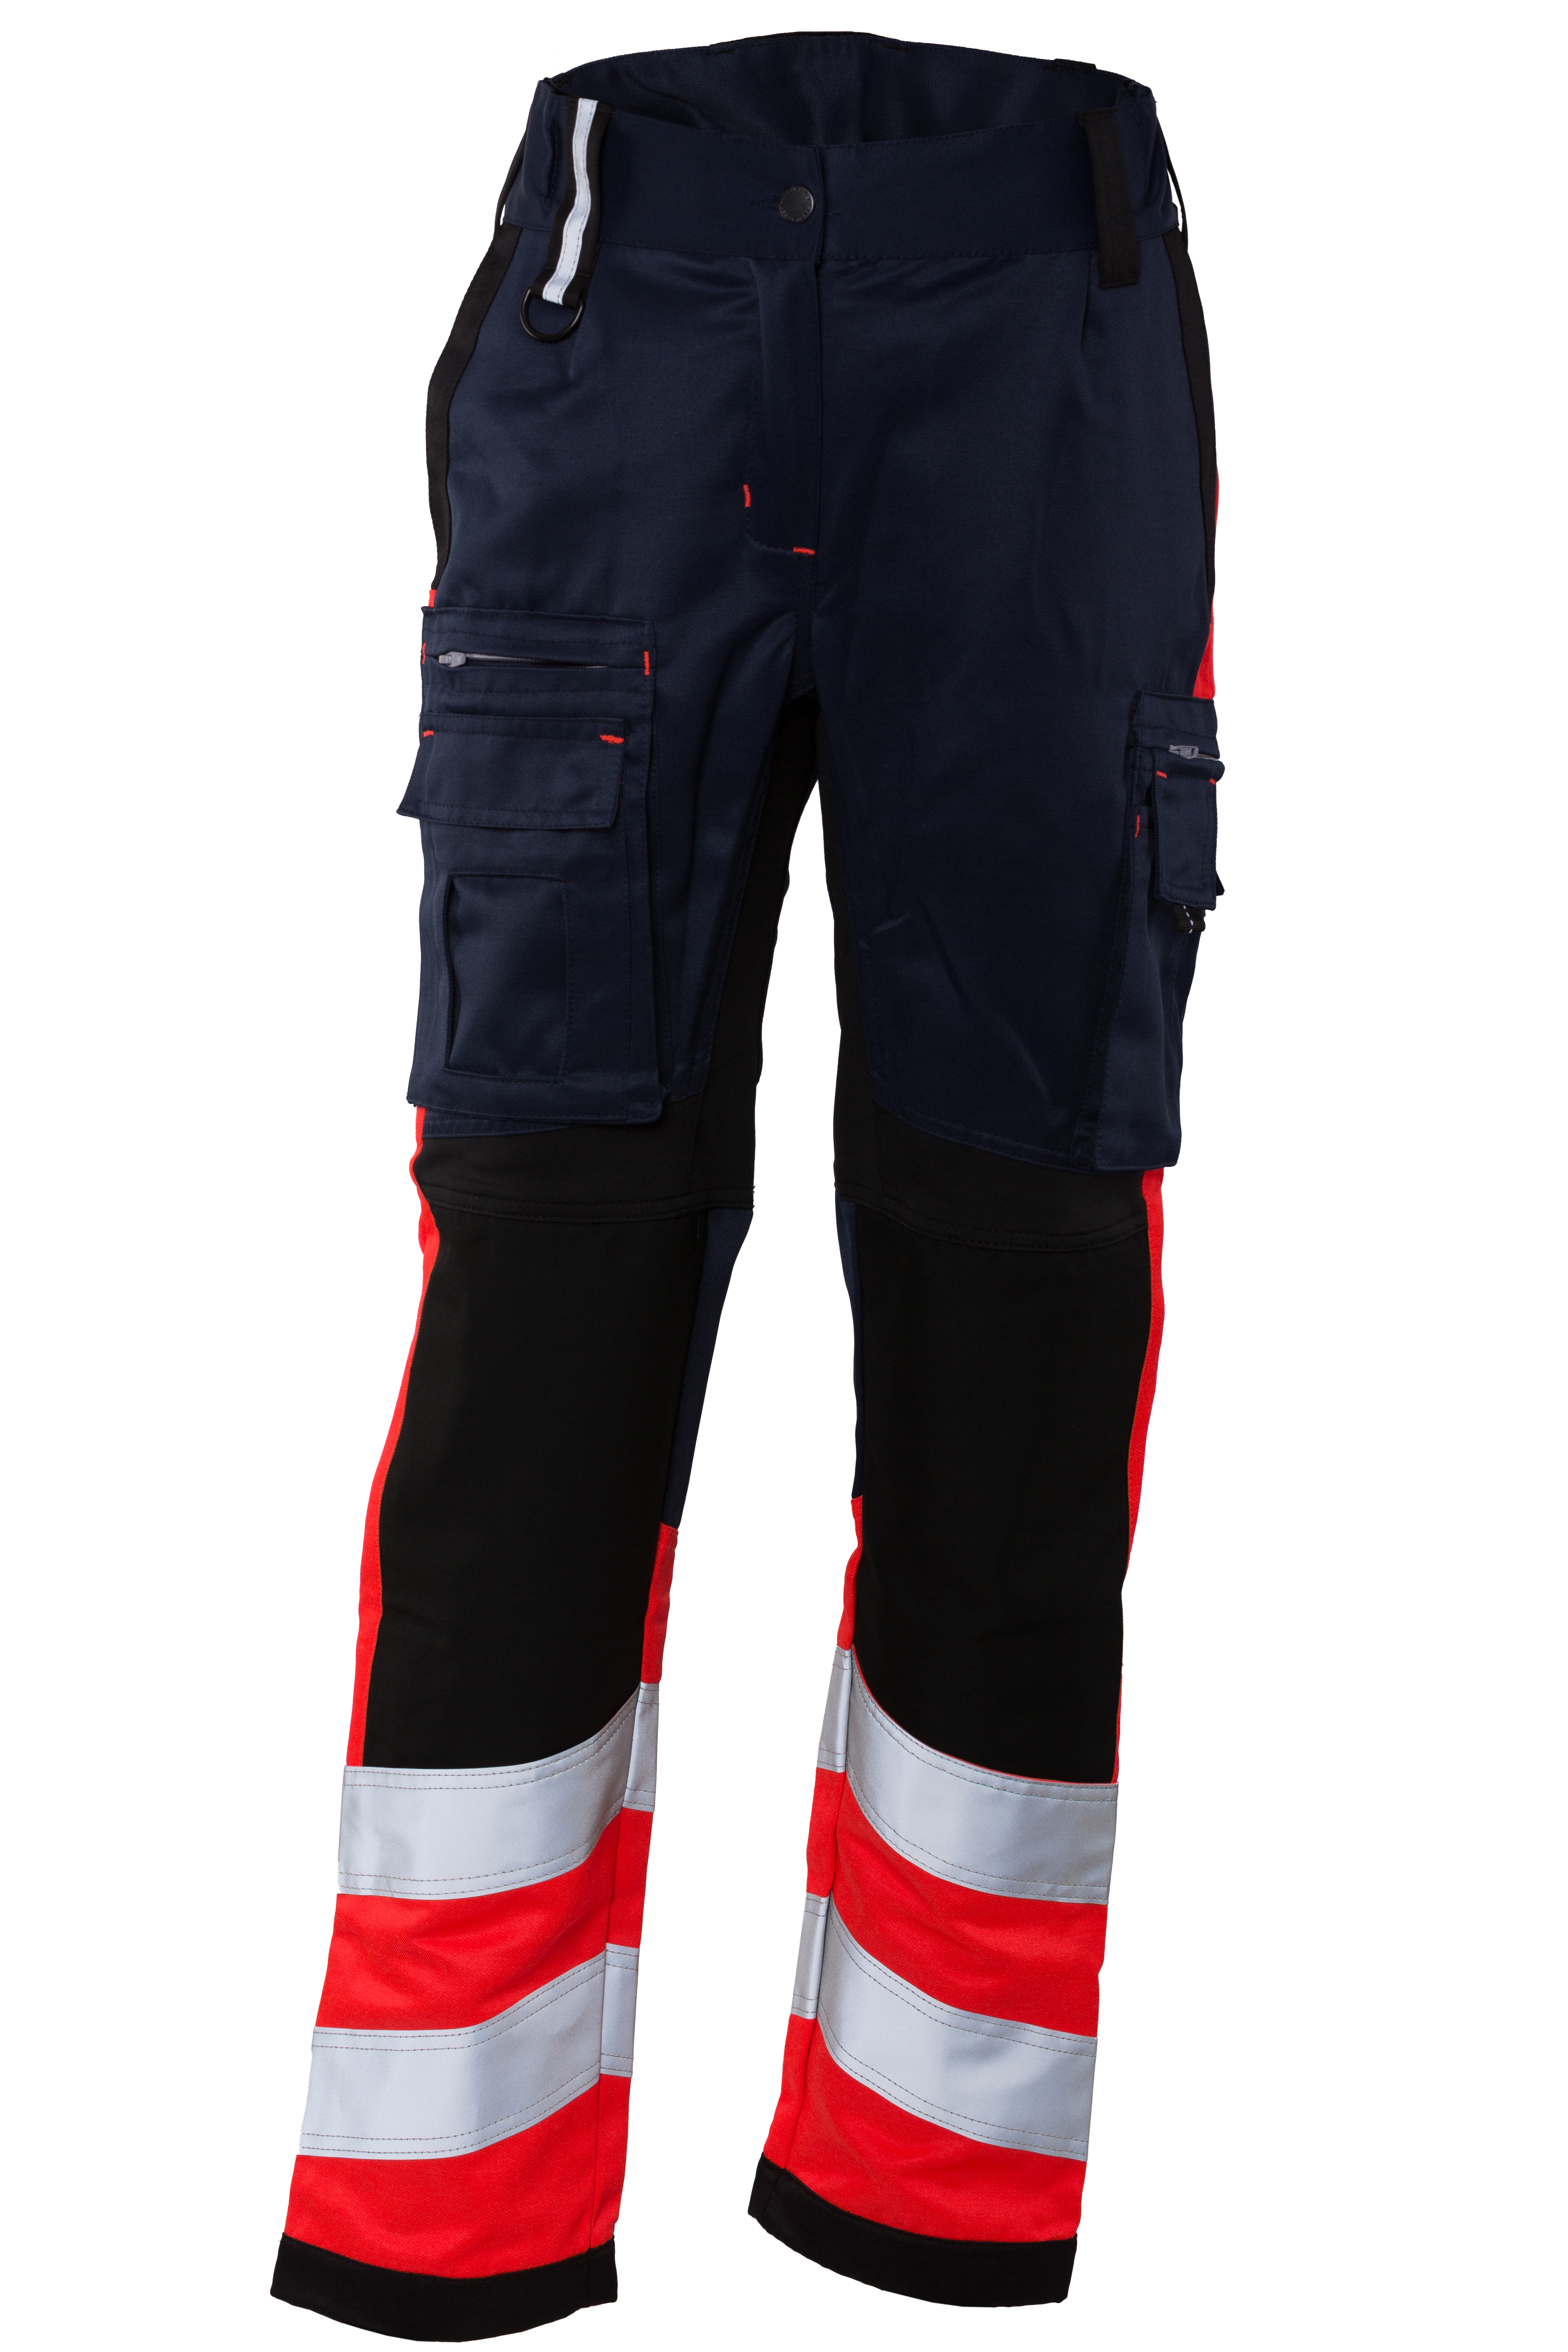 Rescuewear Damen Hose Stretch HiVis Klasse 1 Marineblau / Schwarz / Neon Rot  - 44